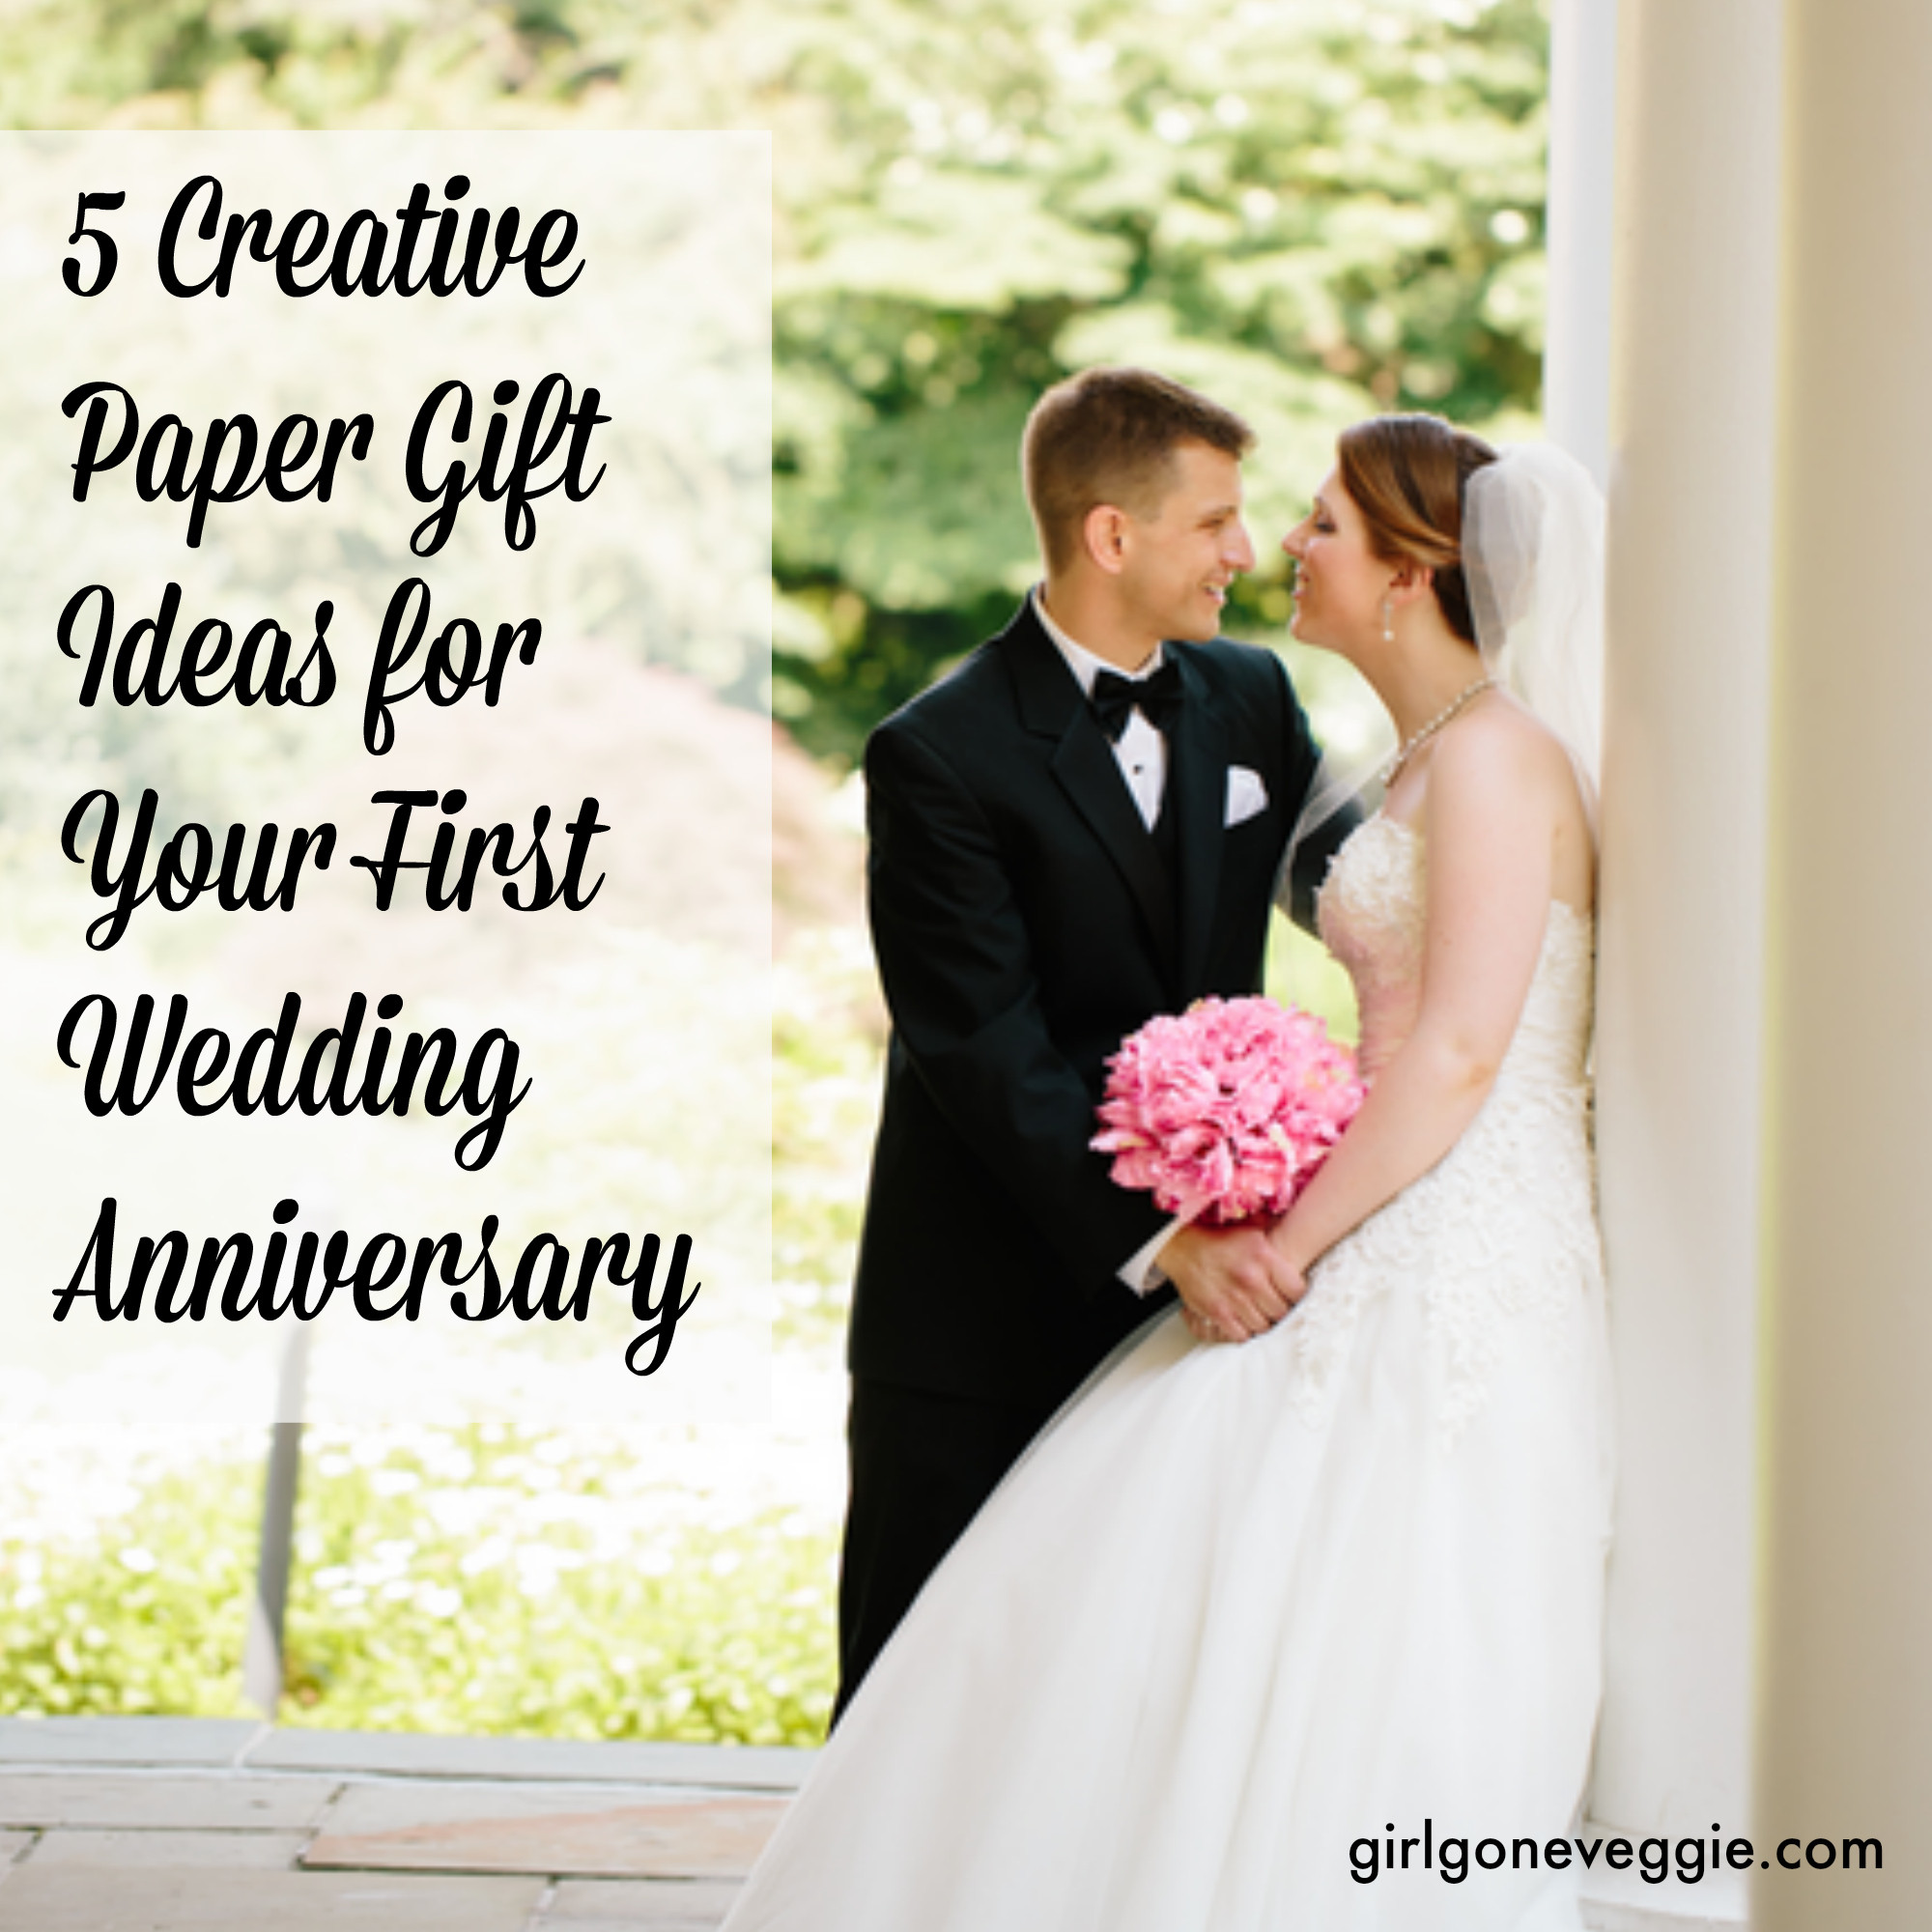 Gift Ideas For 1St Wedding Anniversary
 5 Creative Paper Gift Ideas for Your 1st Wedding Anniversary